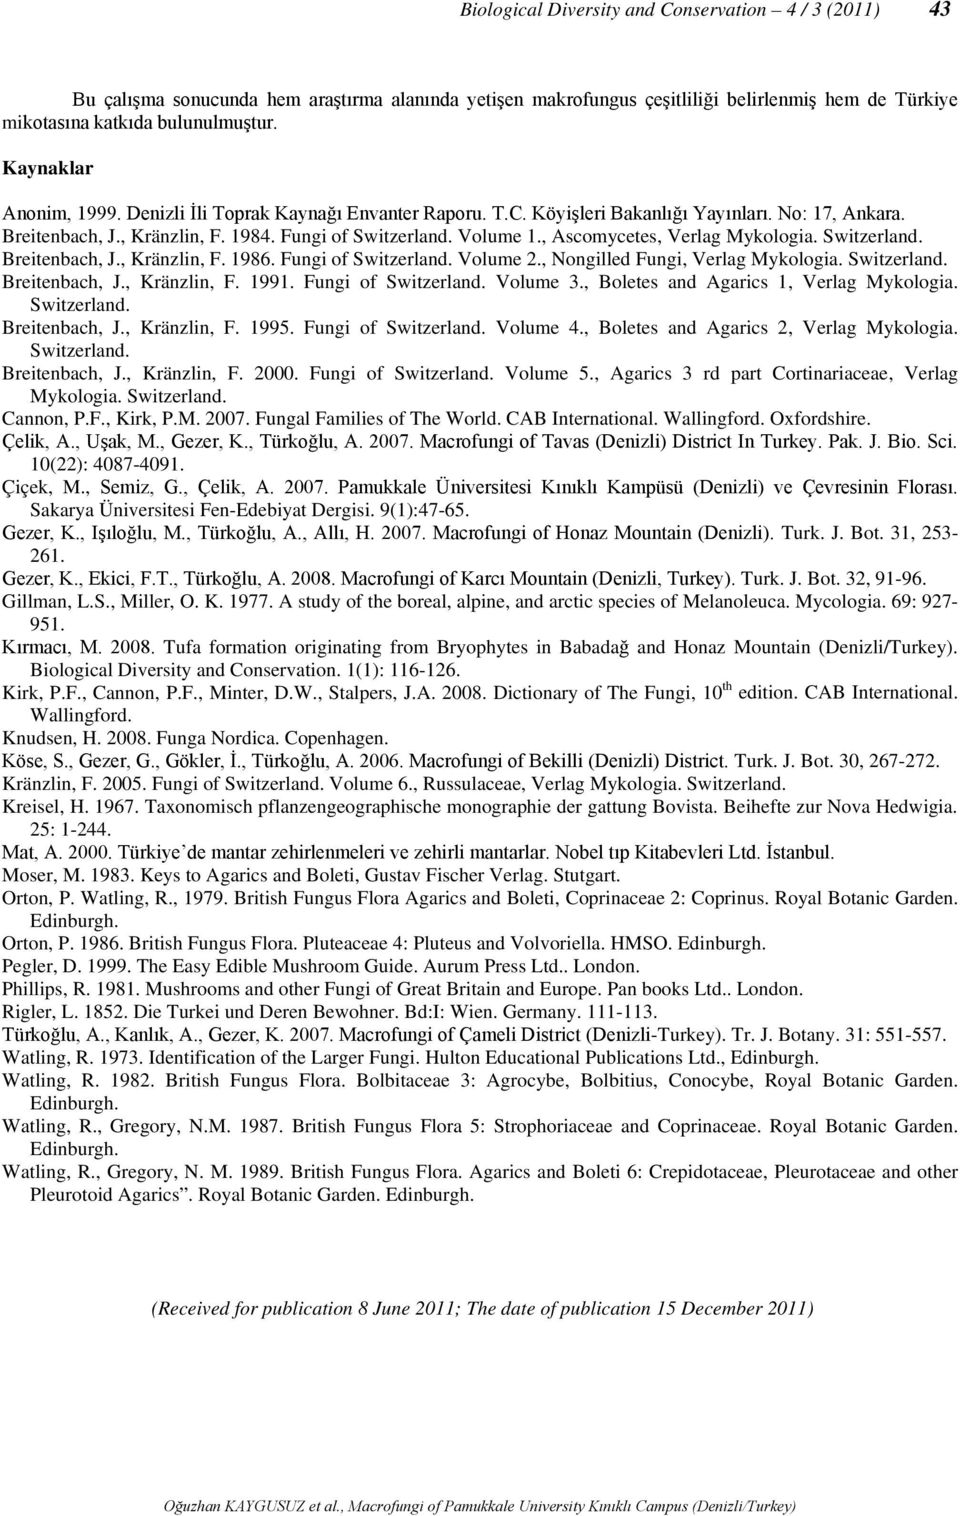 , Ascomycetes, Verlag Mykologia. Switzerland. Breitenbach, J., Kränzlin, F. 1986. Fungi of Switzerland. Volume 2., Nongilled Fungi, Verlag Mykologia. Switzerland. Breitenbach, J., Kränzlin, F. 1991.